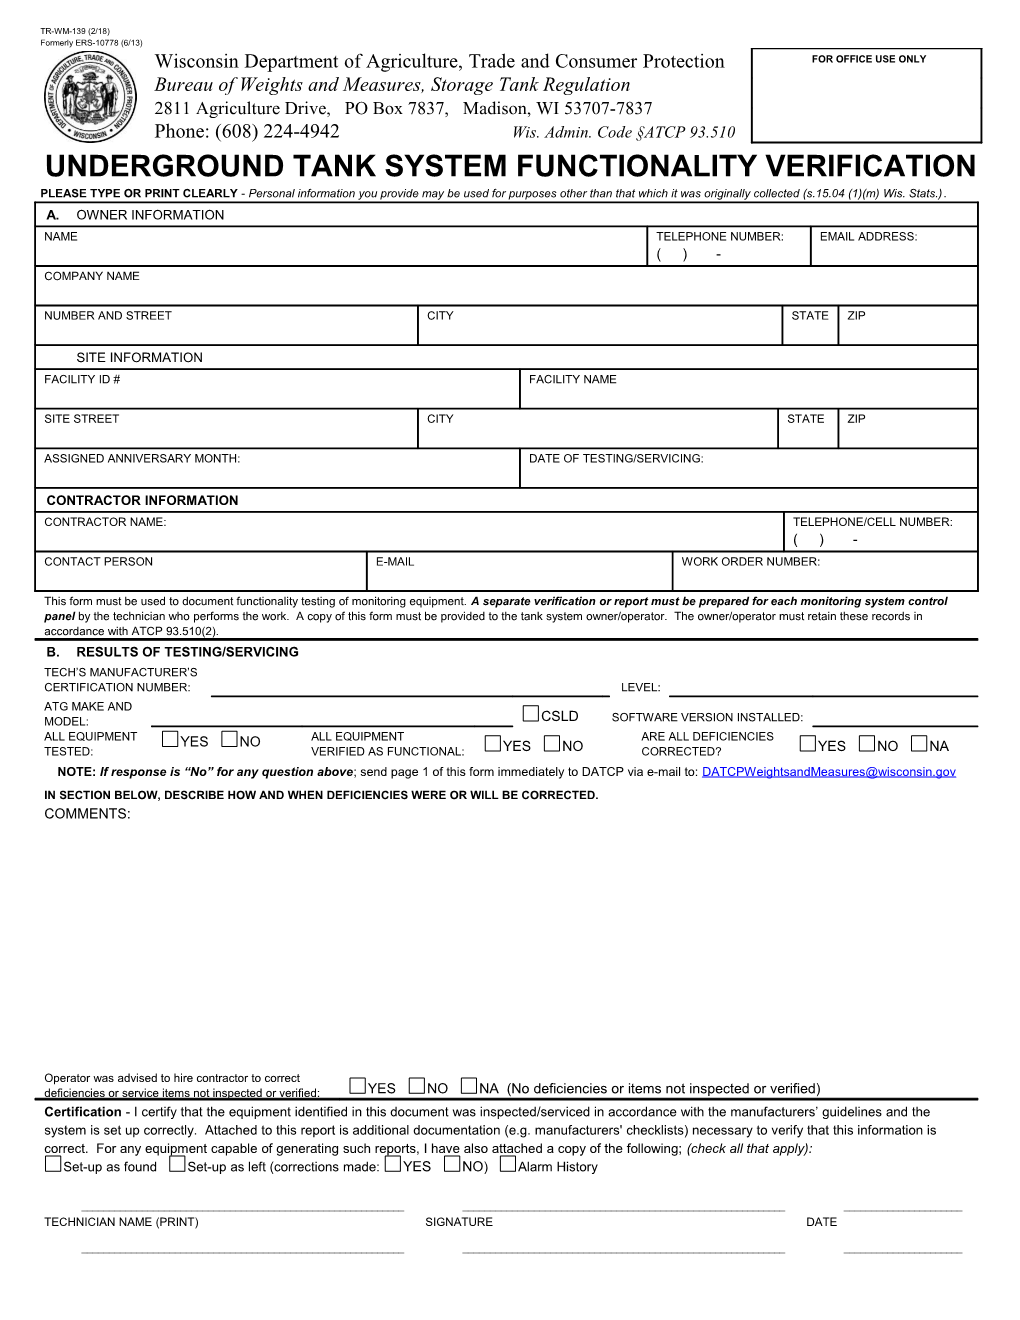 Underground Tank System Functionality Verification